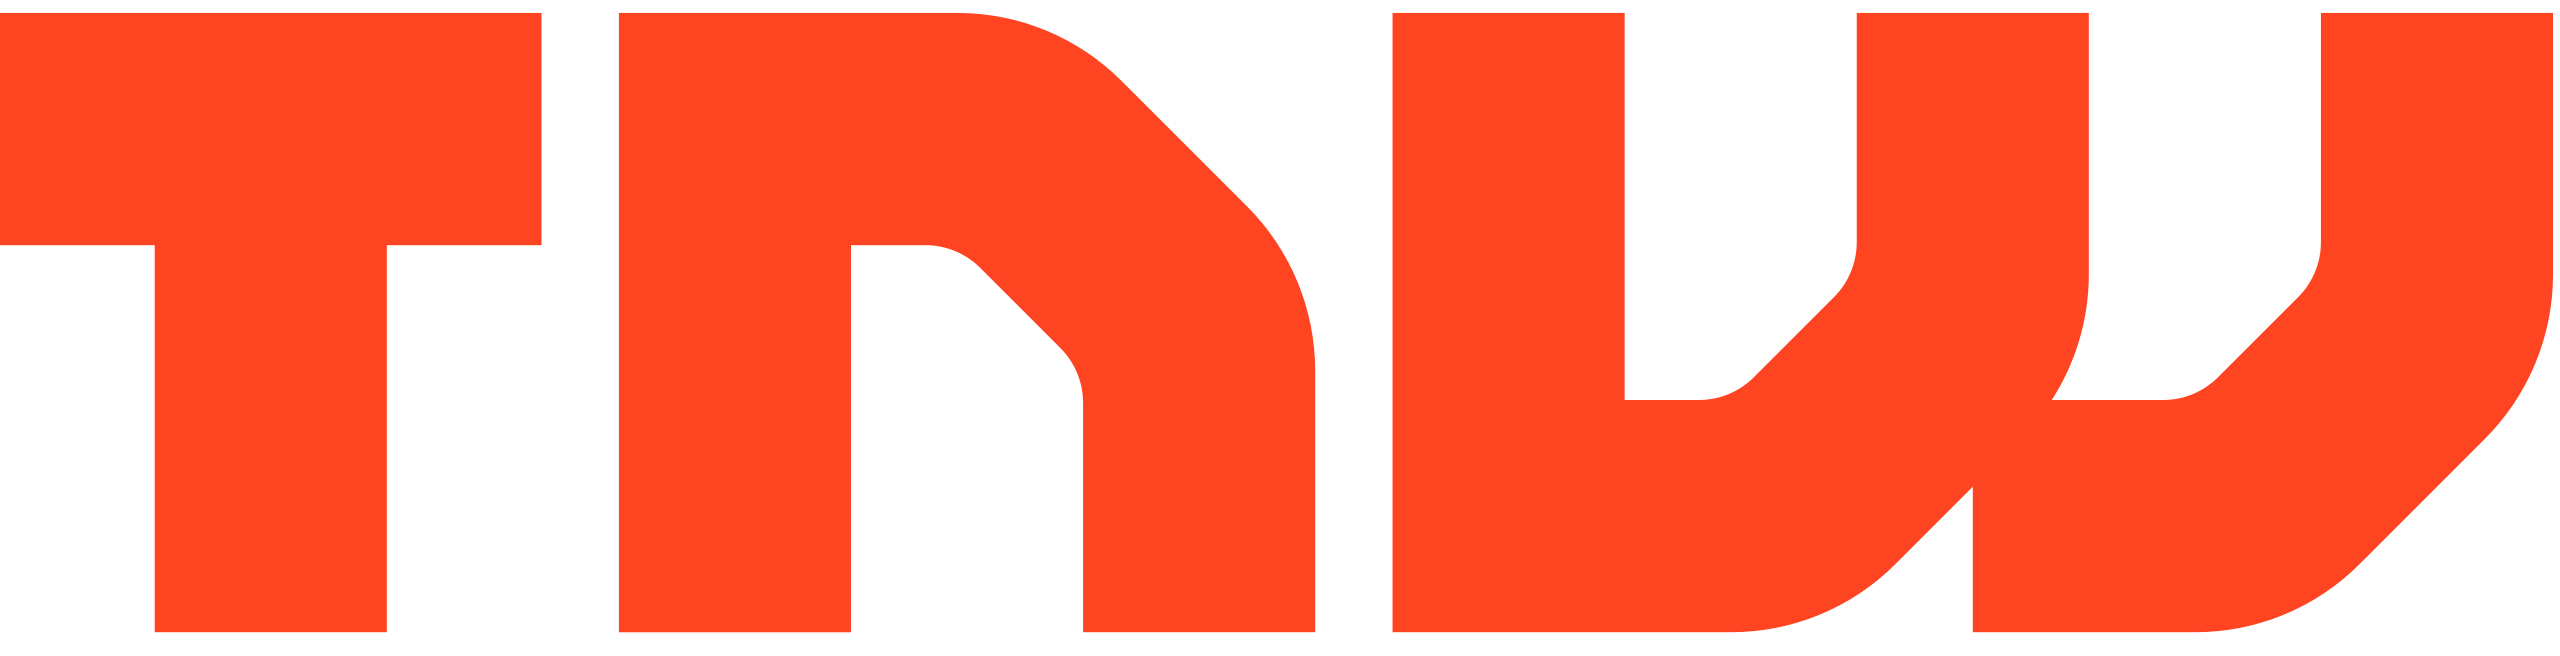 The_Next_Web_Logo.svg.png